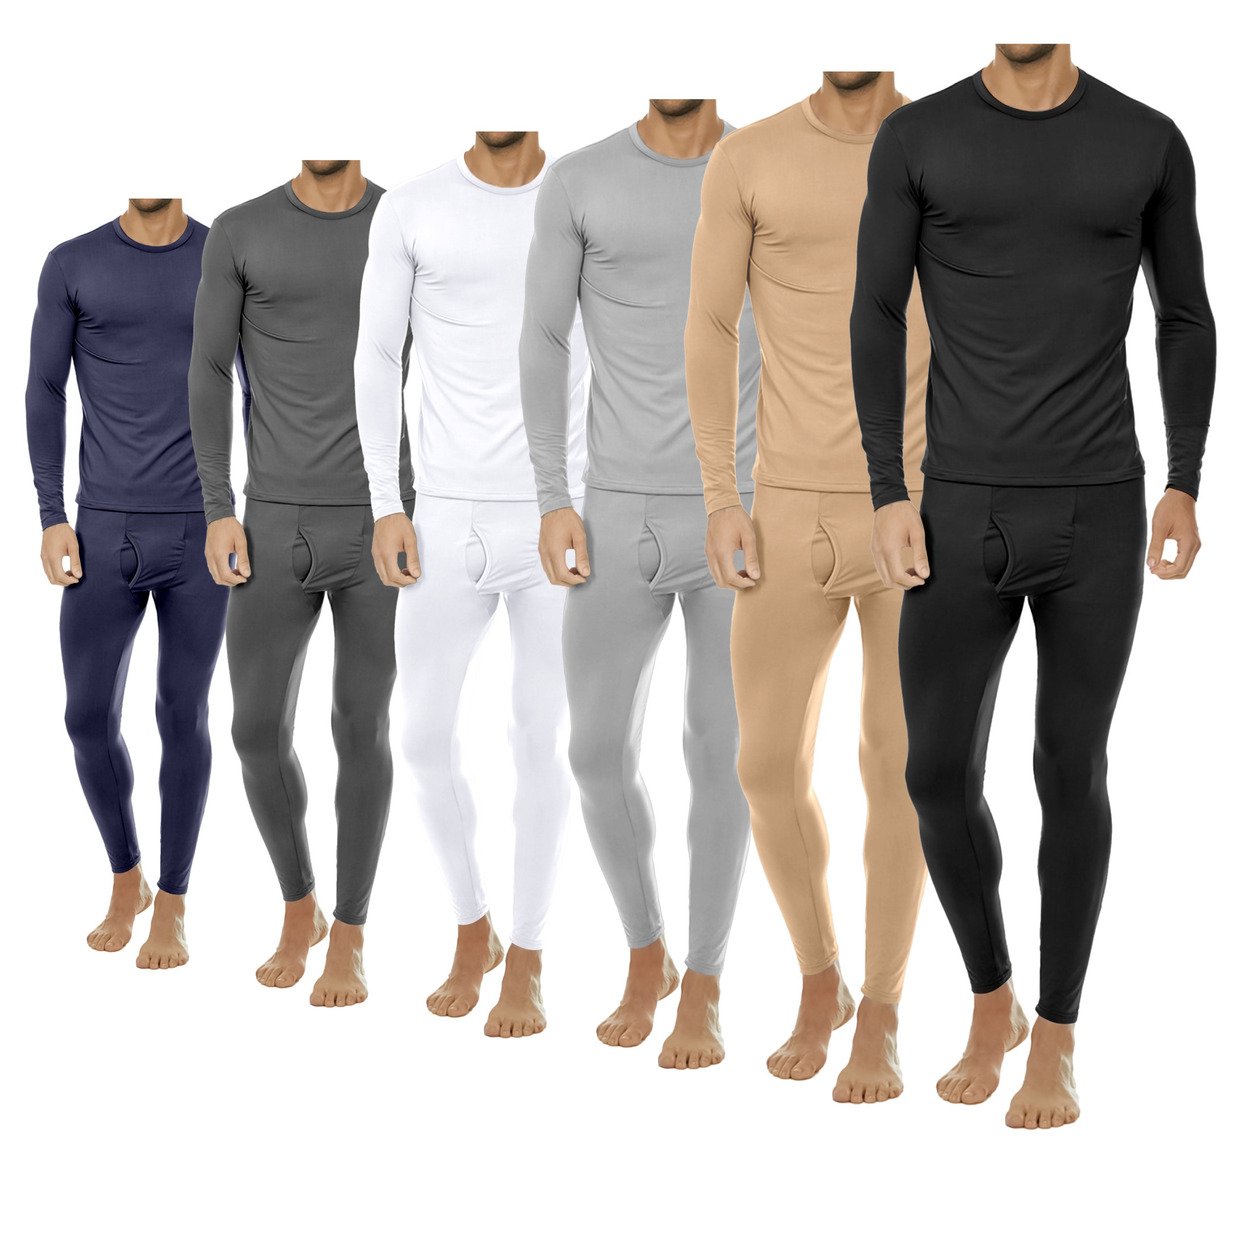 2-Sets: Men's Winter Warm Fleece Lined Thermal Underwear Set For Cold Weather - Black&black, Large